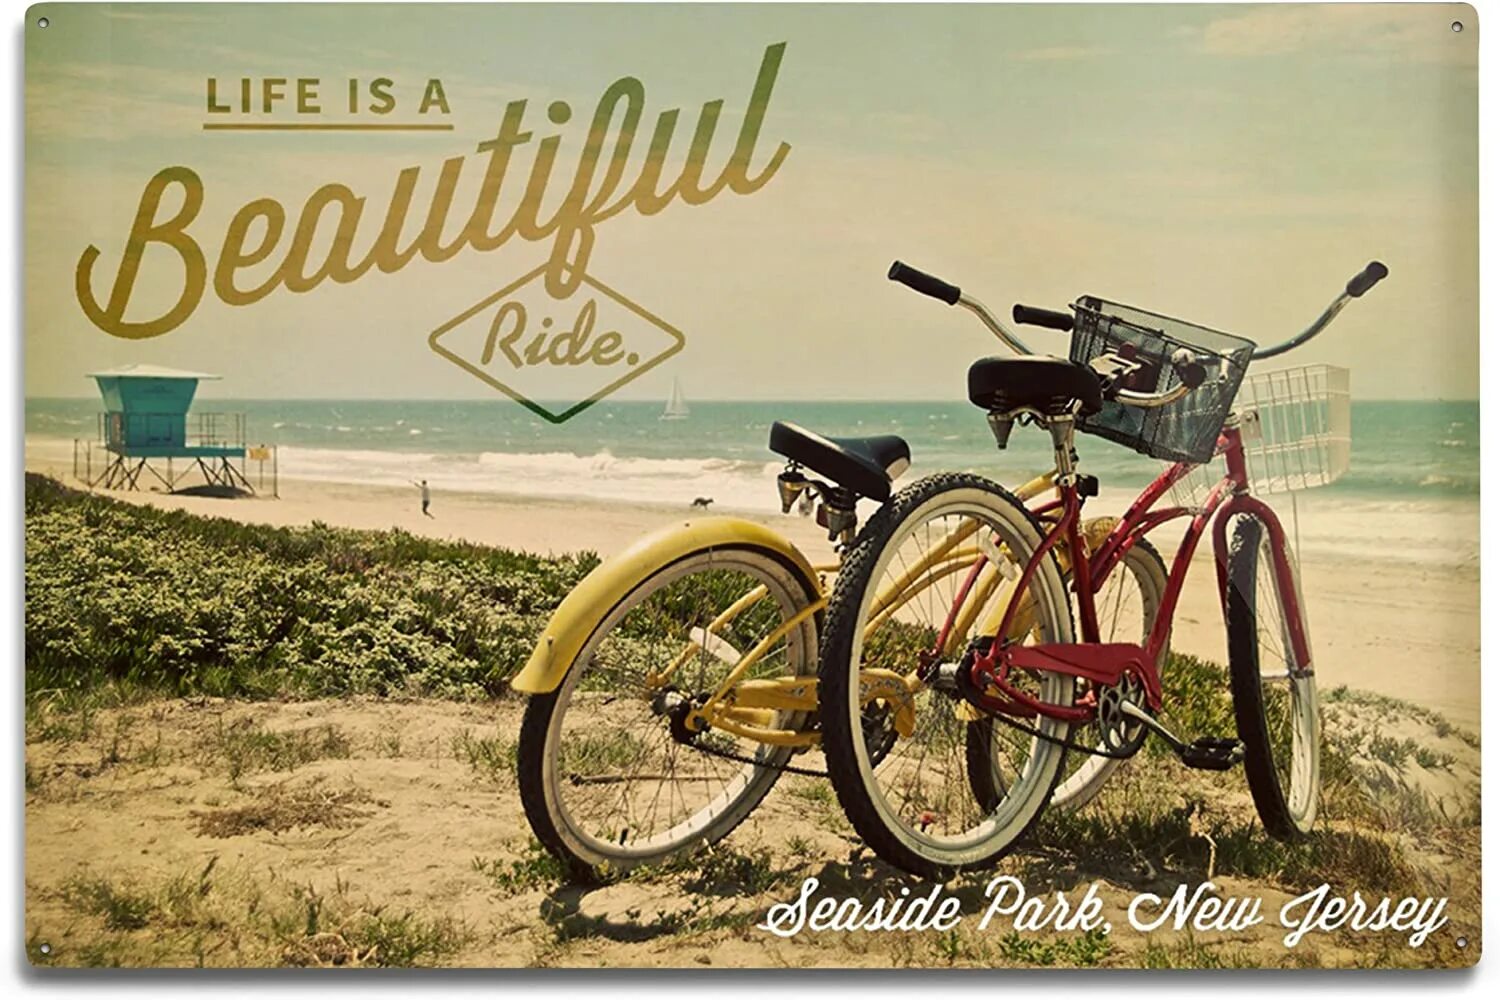 Life is ride. Life is a beautiful Ride. Велосипед Калифорния. Название велосипеда Калифорния. Вино Калифорния с велосипедом.